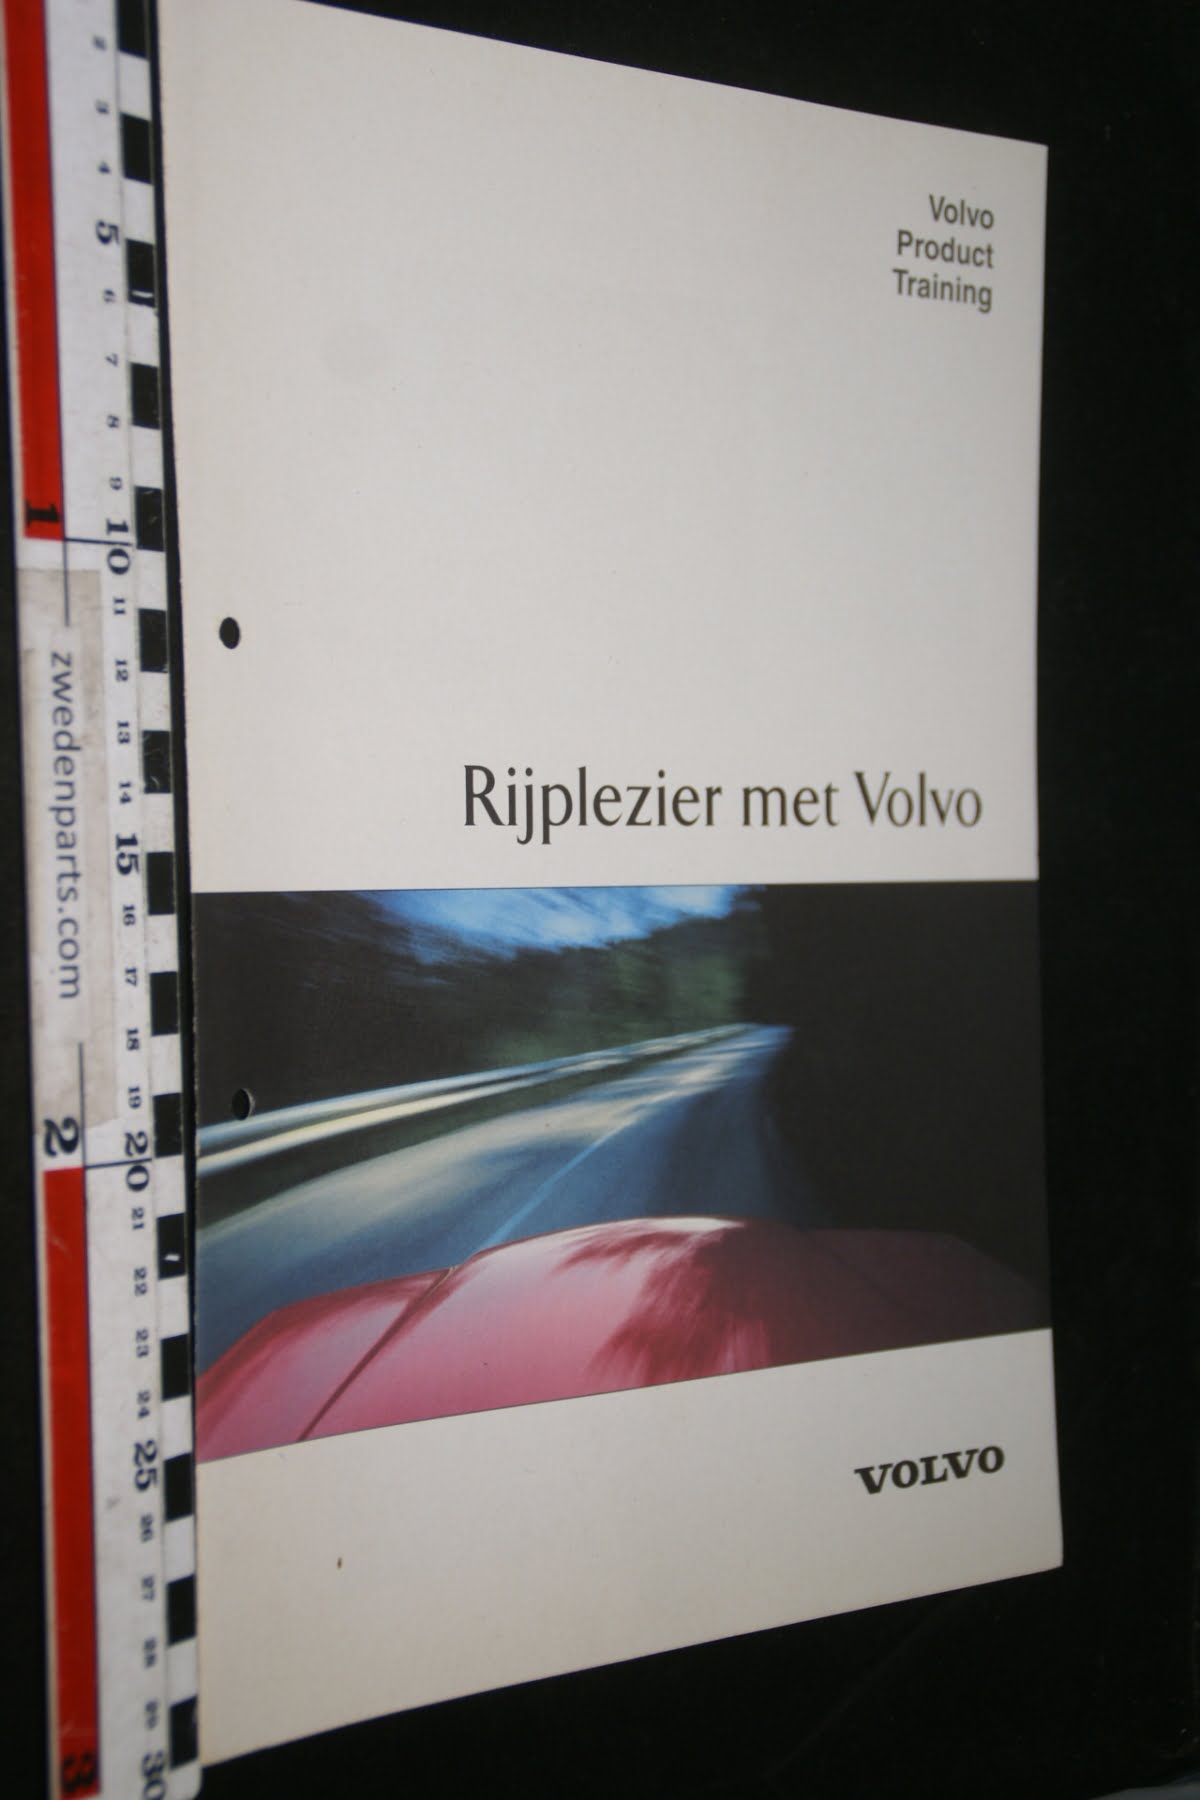 DSC02942 1995 brochure origineel Volvo Product Training Rijplezier met Volvo nr PV 523-31334-a24be30f